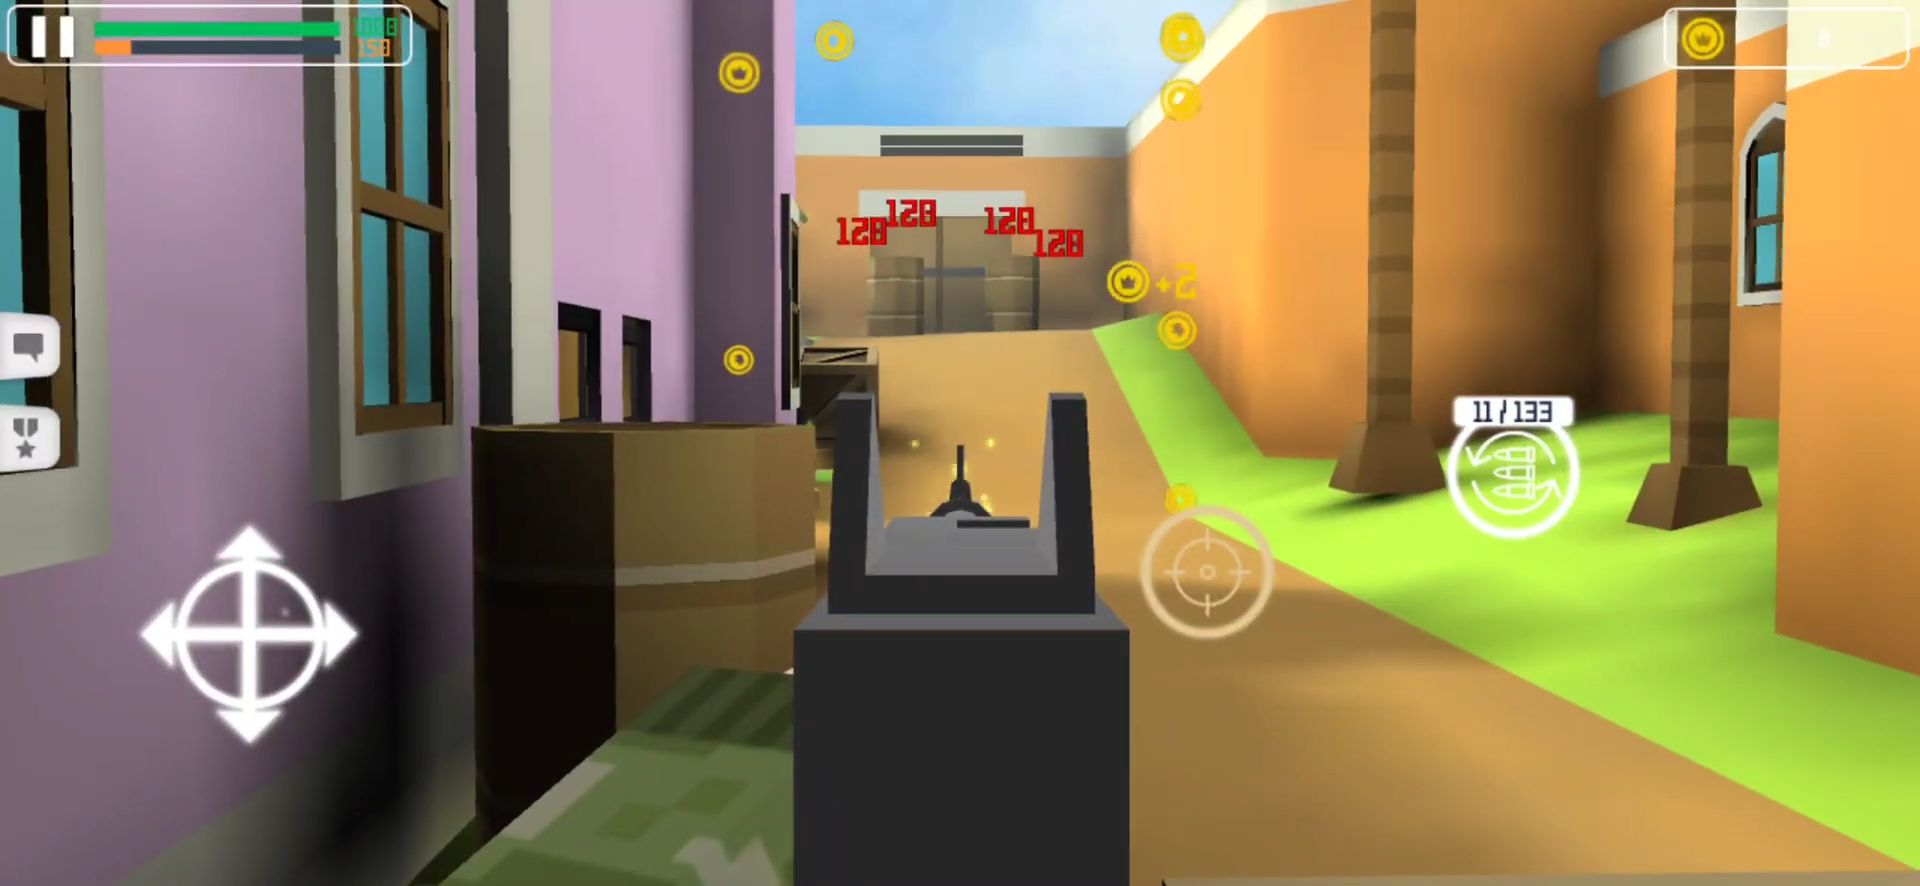 Block Gun: FPS PvP War - Online Gun Shooting Games - Android game screenshots.